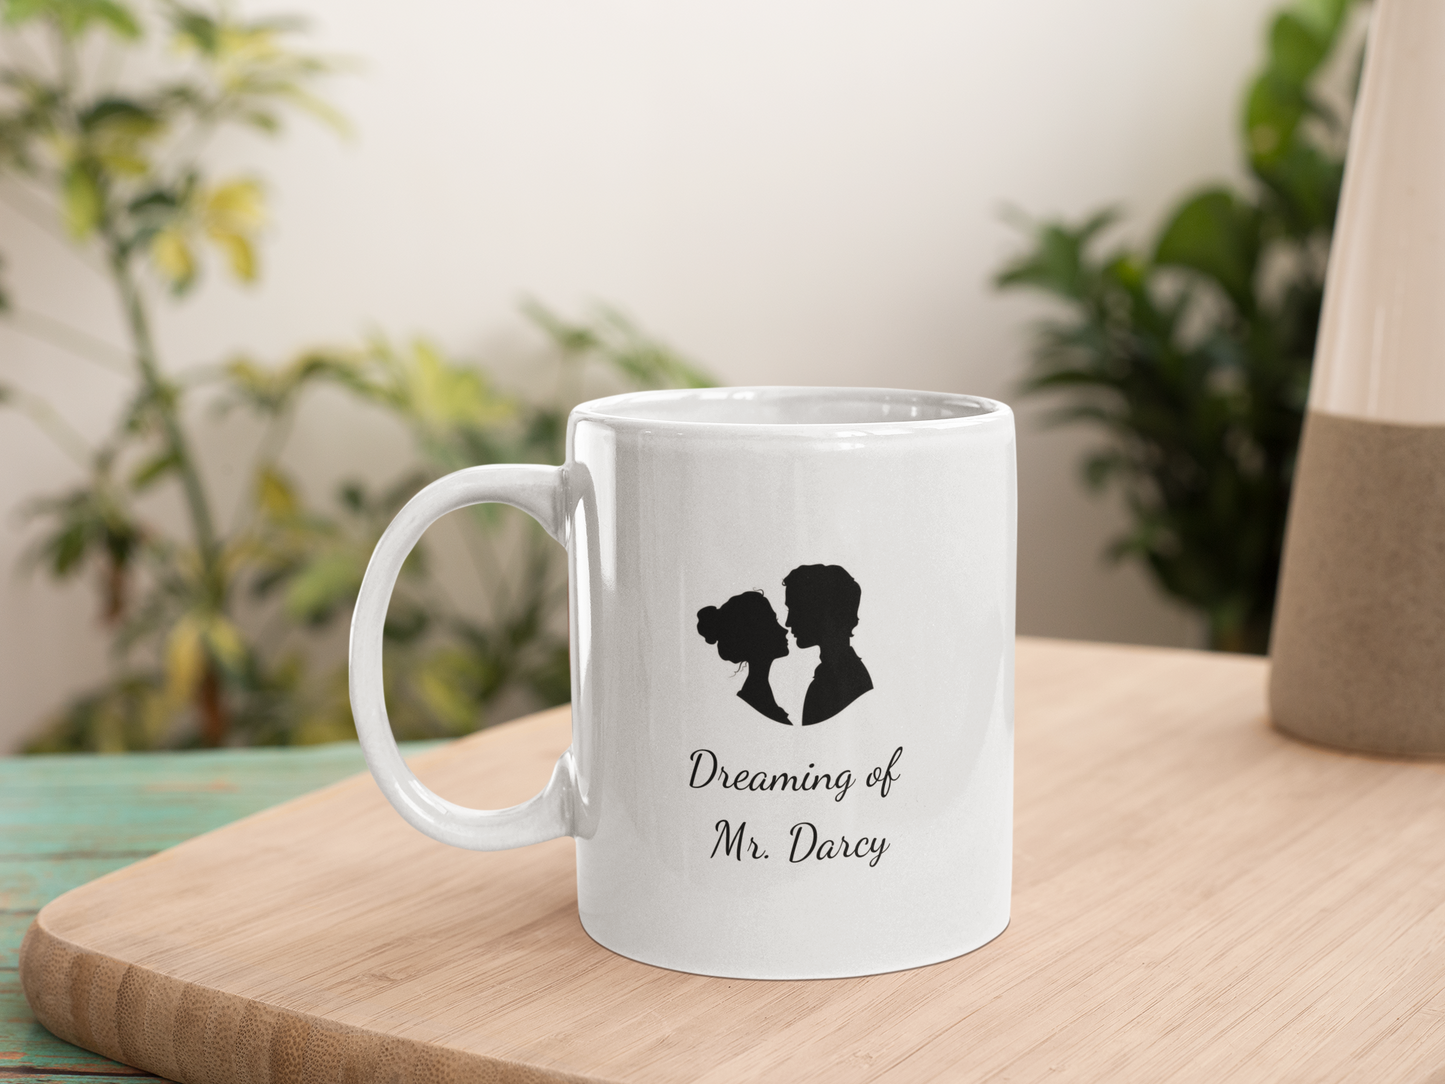 Dreaming of Mr. Darcy Mug